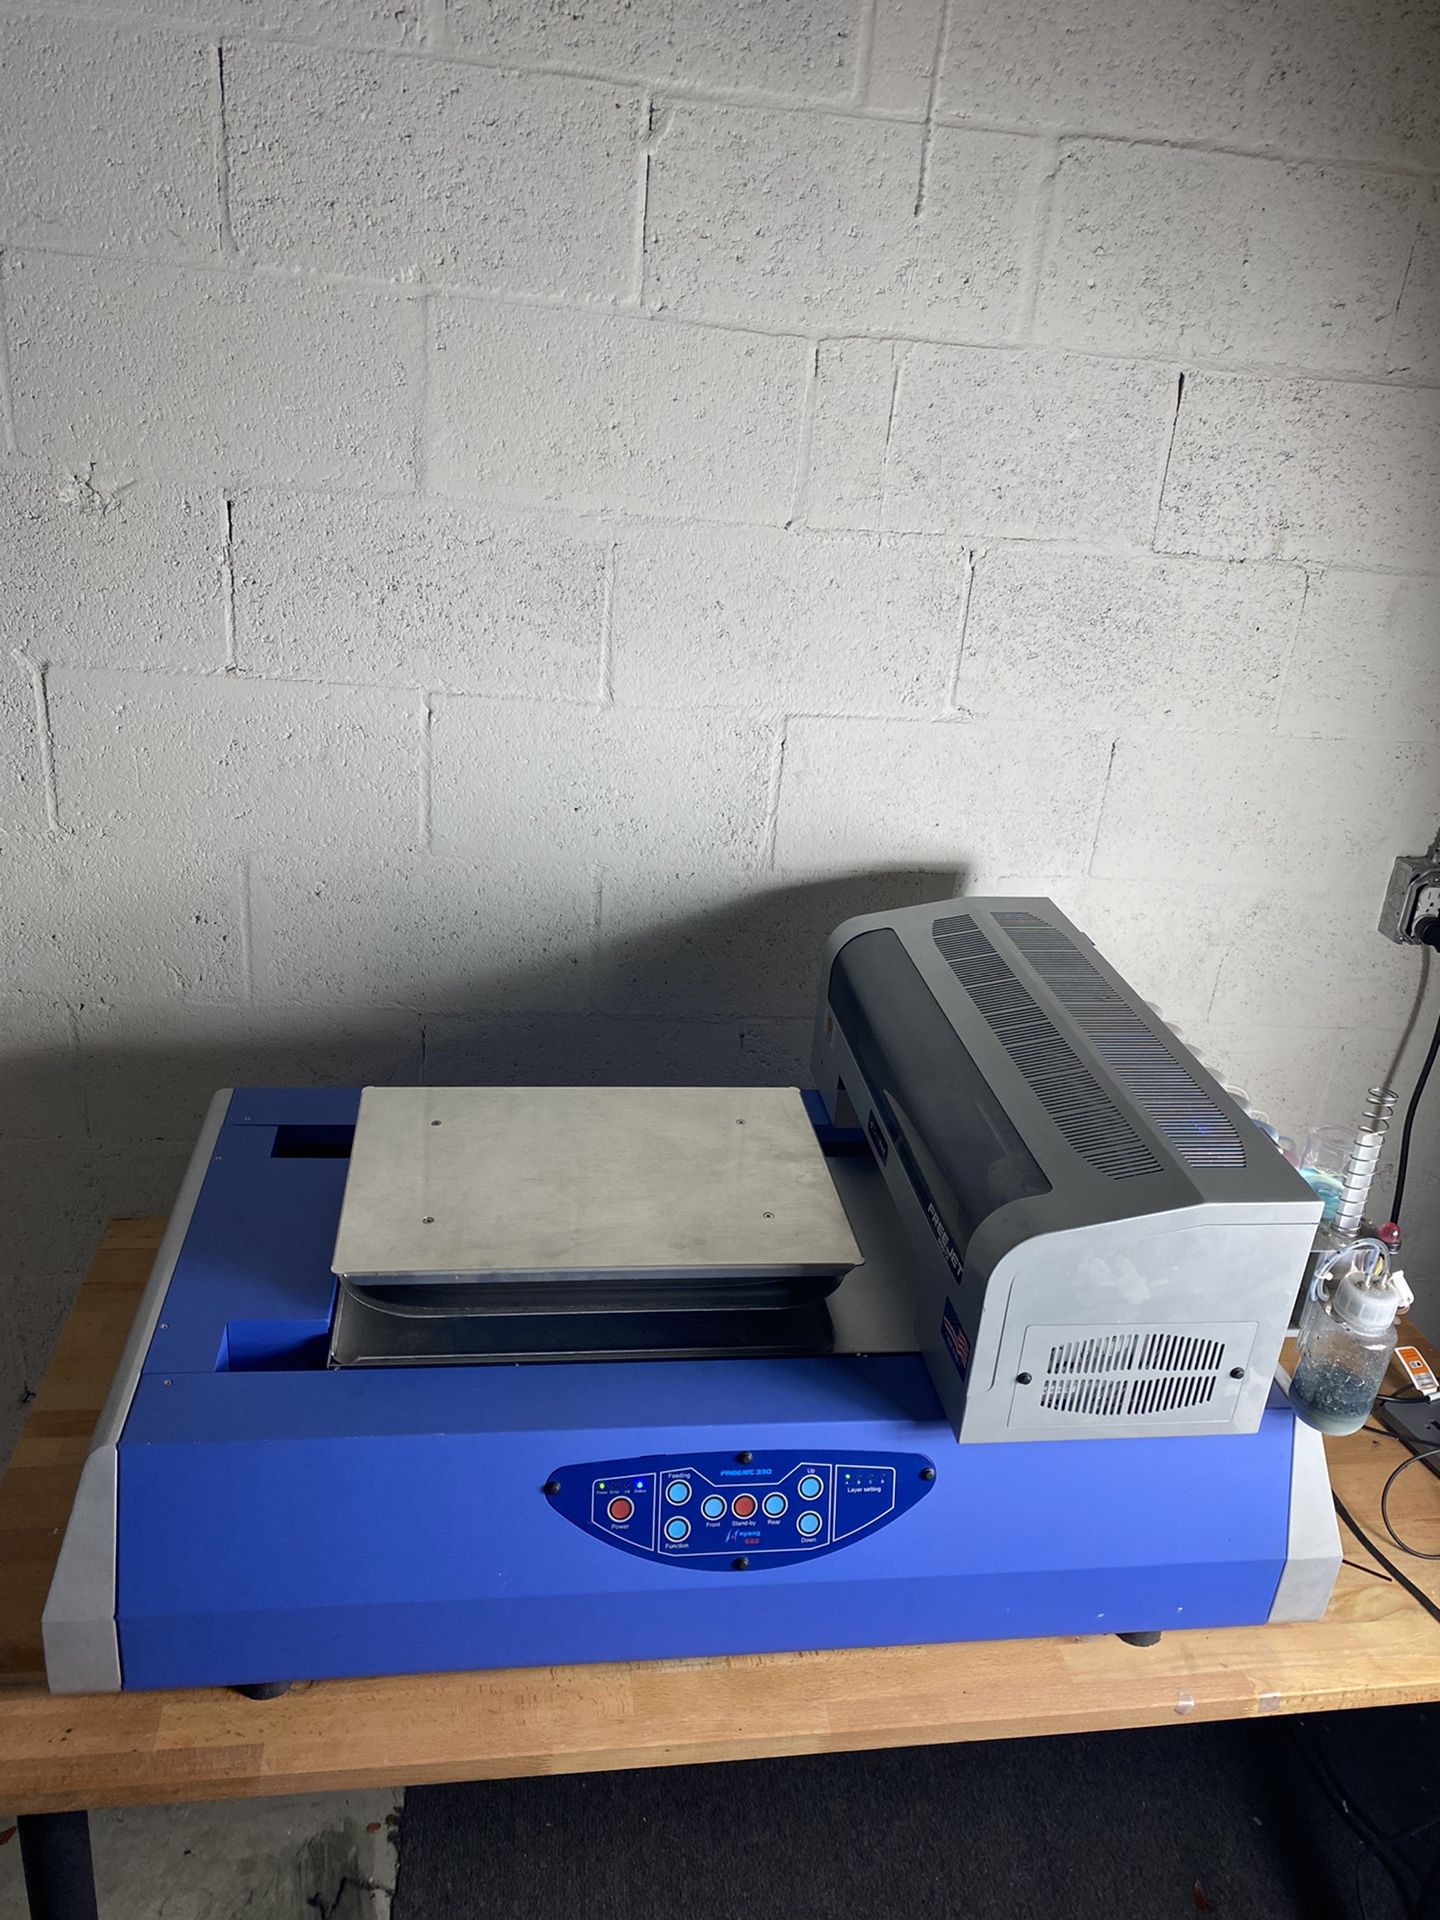 Omniprint freejet 330tx Dtg Printer and King cobra pretreat machine